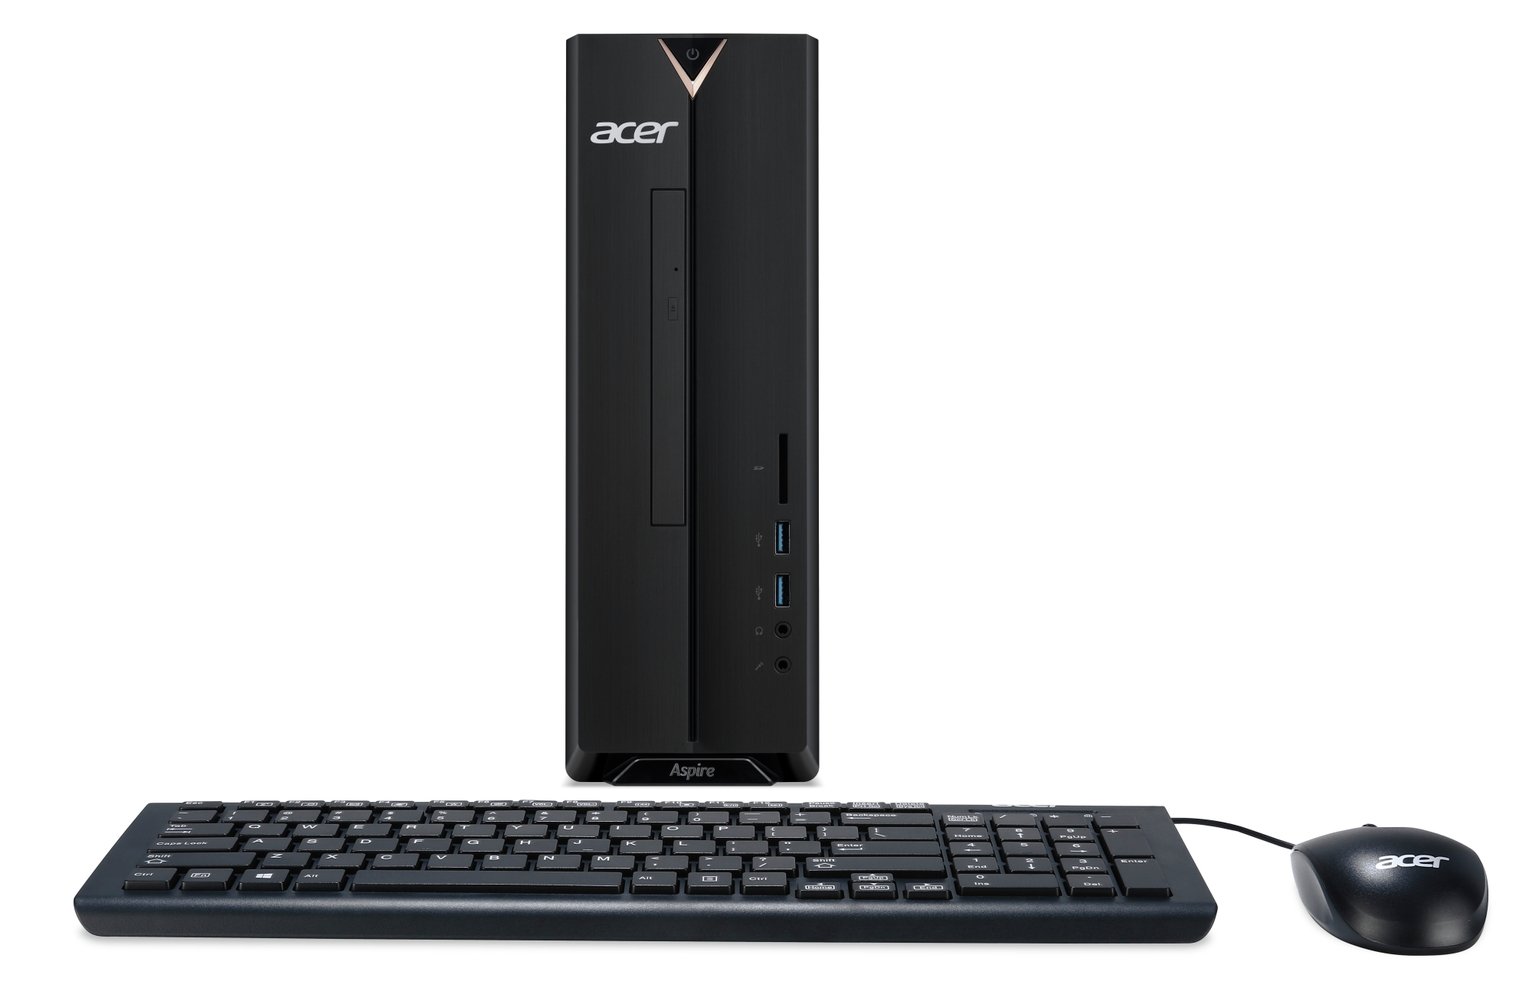 Acer XC830 Celeron 4GB 1TB Desktop PC